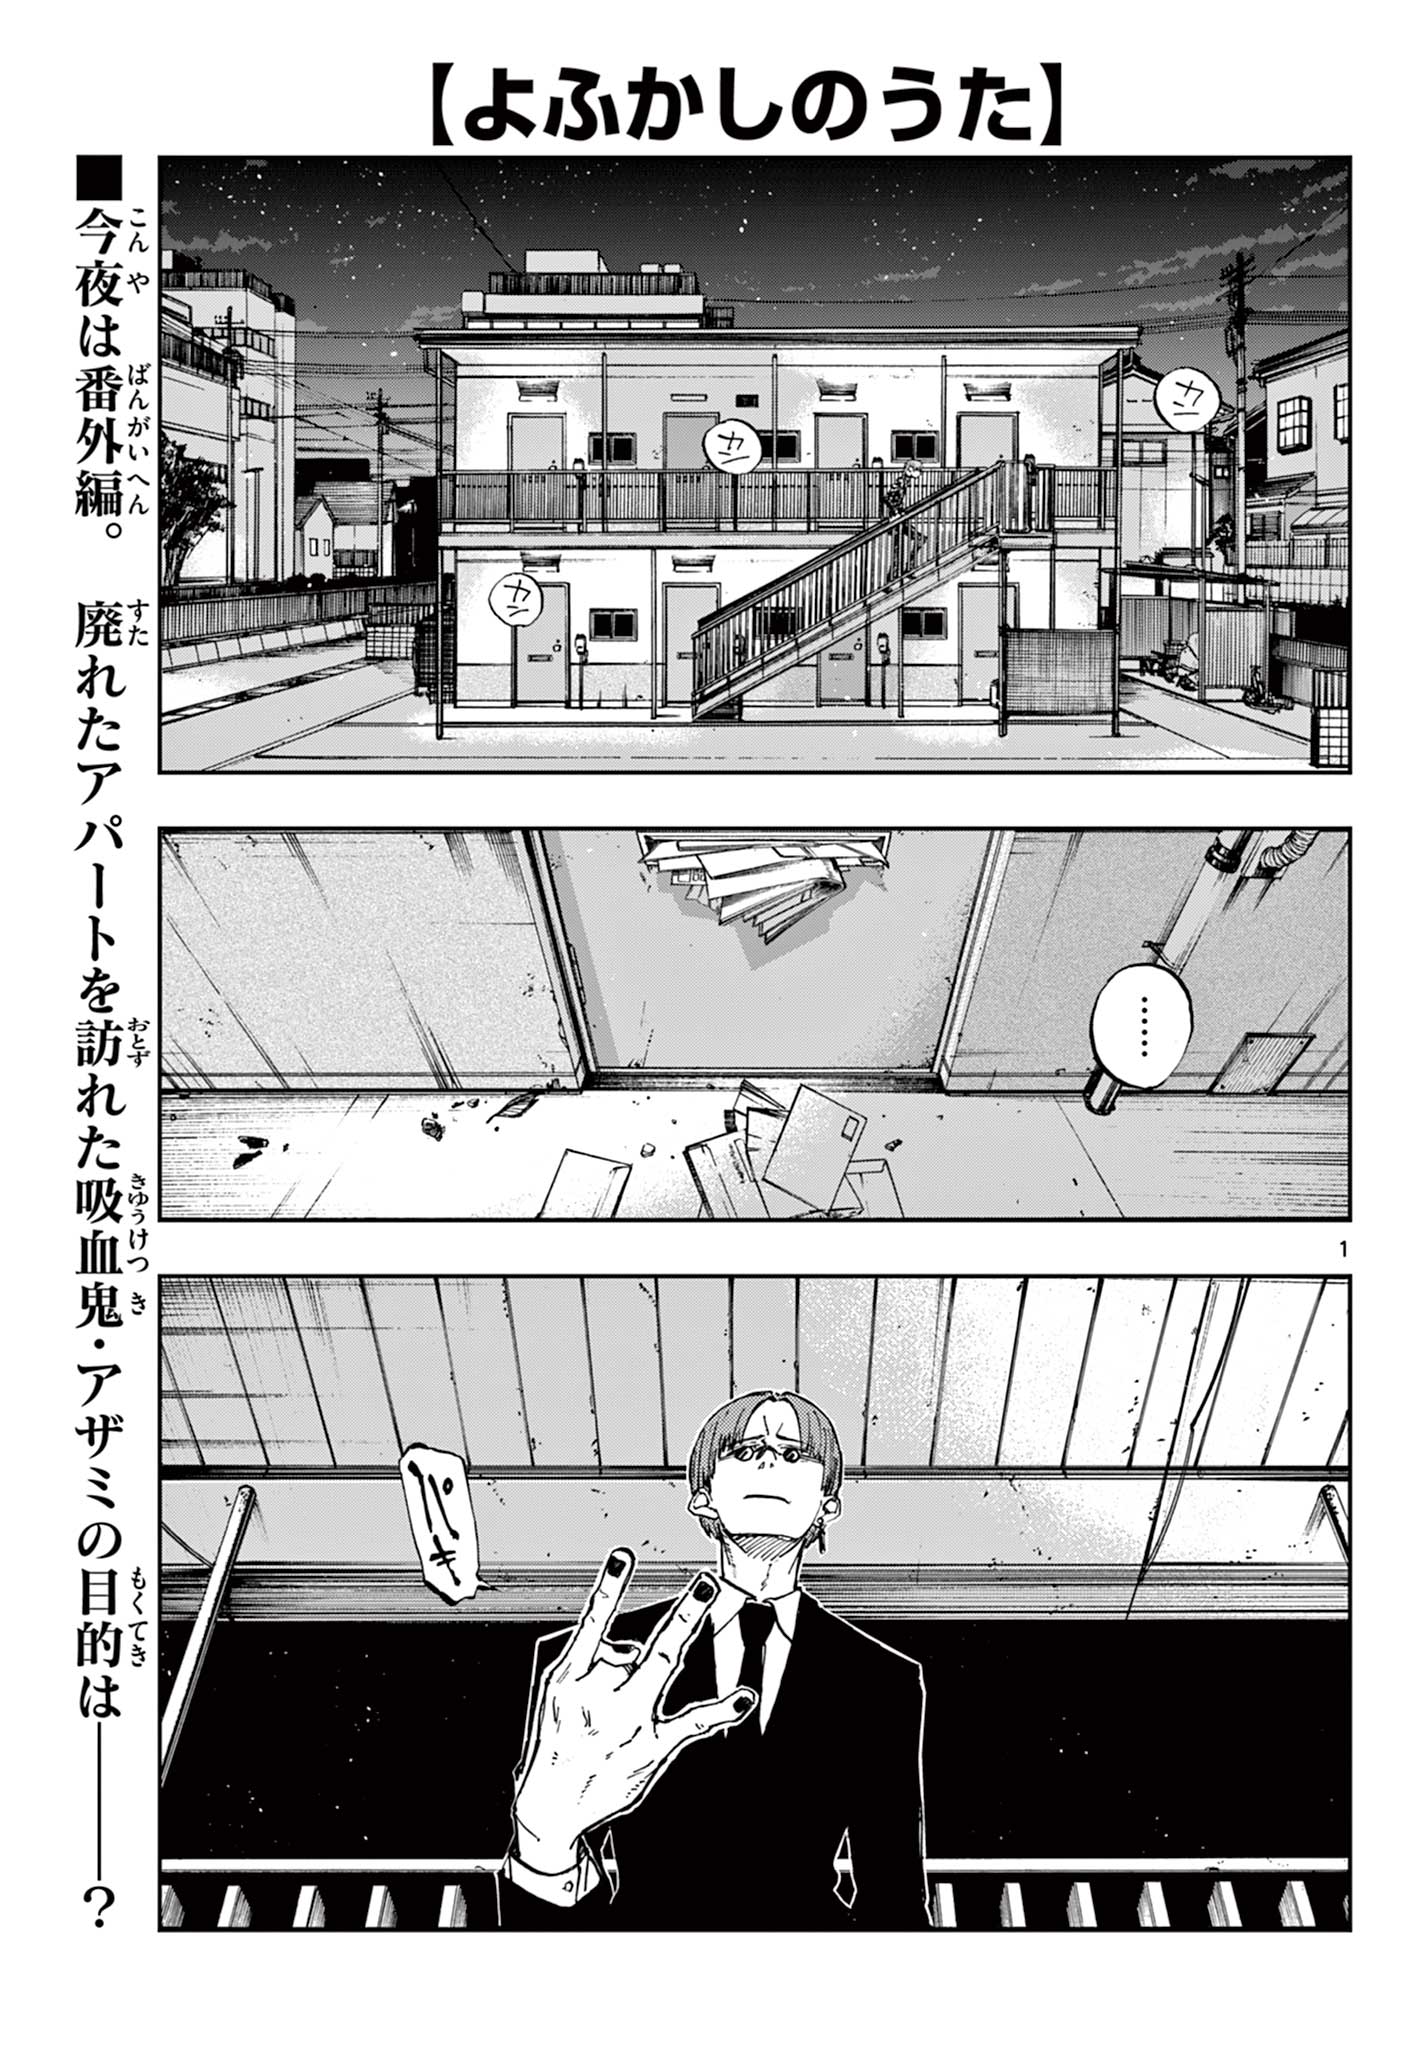 Yofukashi no Uta - Chapter 182.5 - Page 1